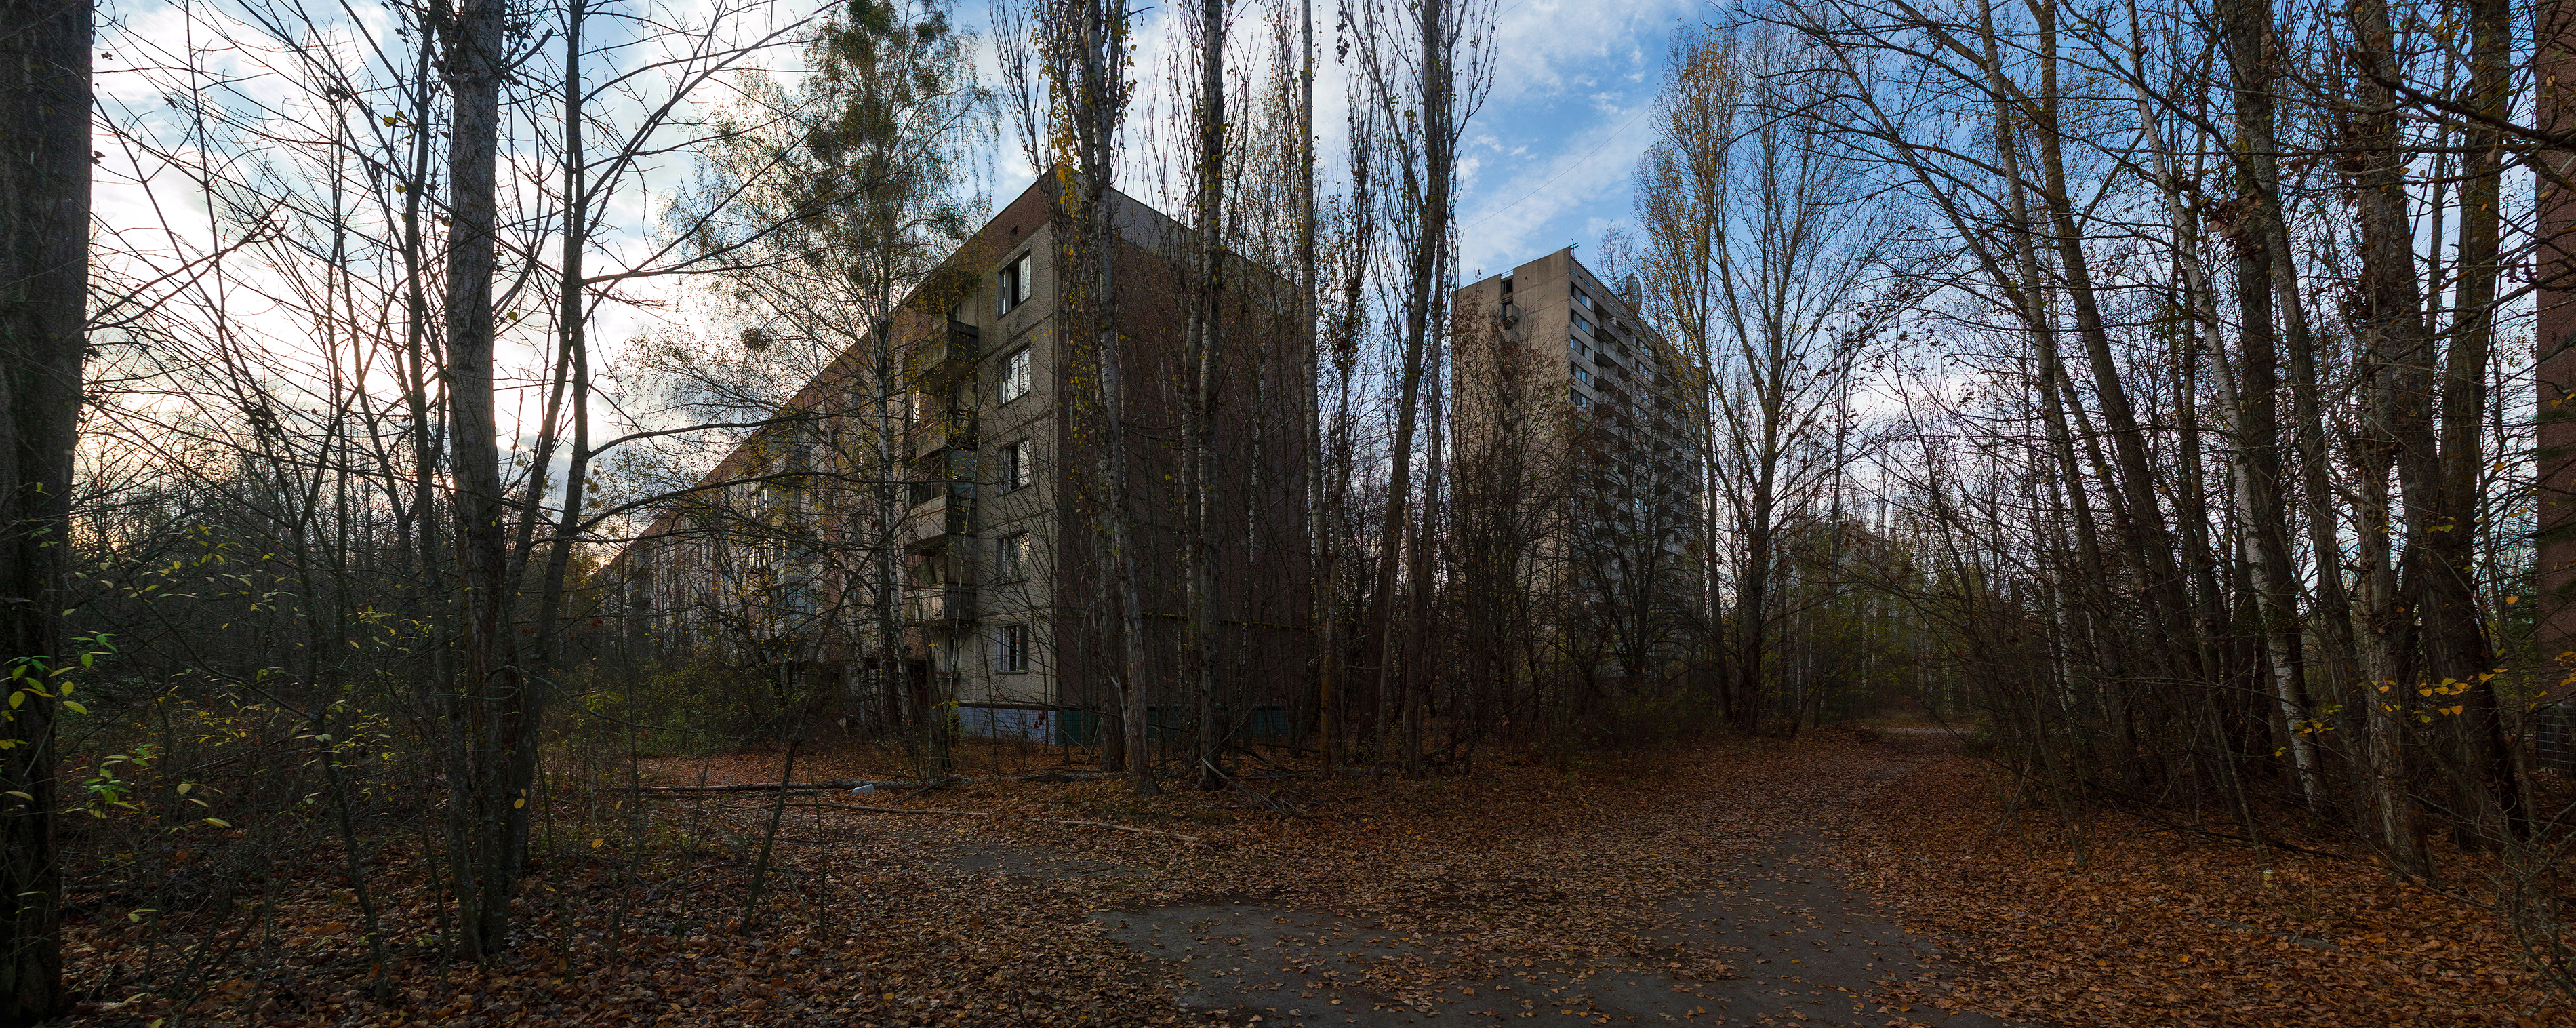 Pripyat Chernobyl Landscape Block Of Flats Fallen Leaves Trees Ukraine 3800x1516